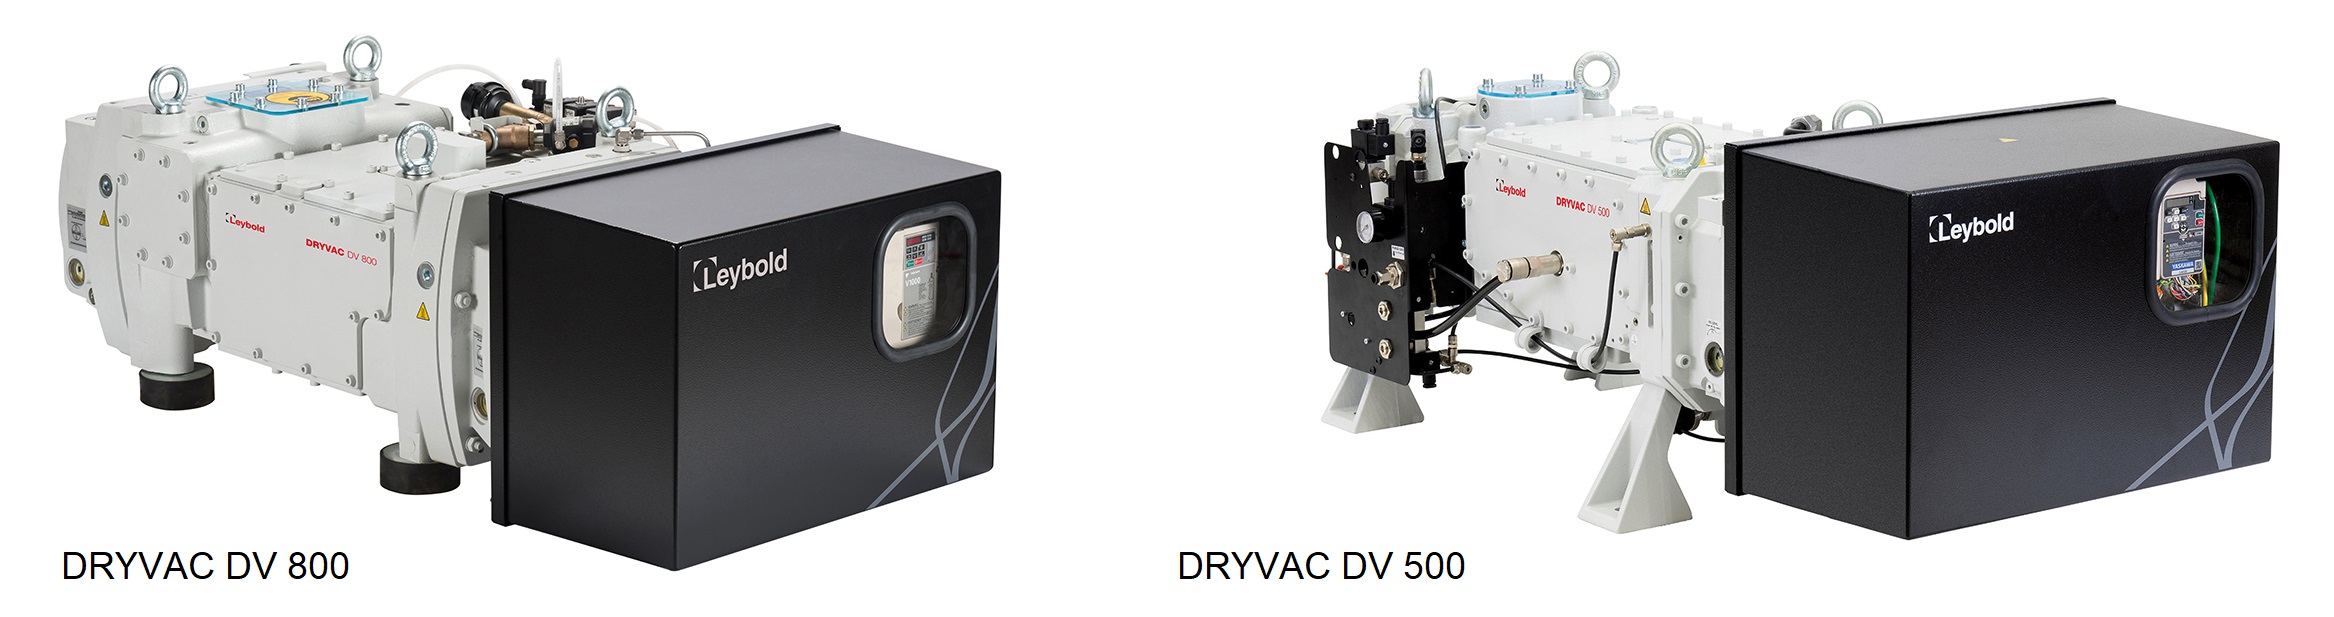 Leybold-DRYVAC_DV_800 and 500.jpg